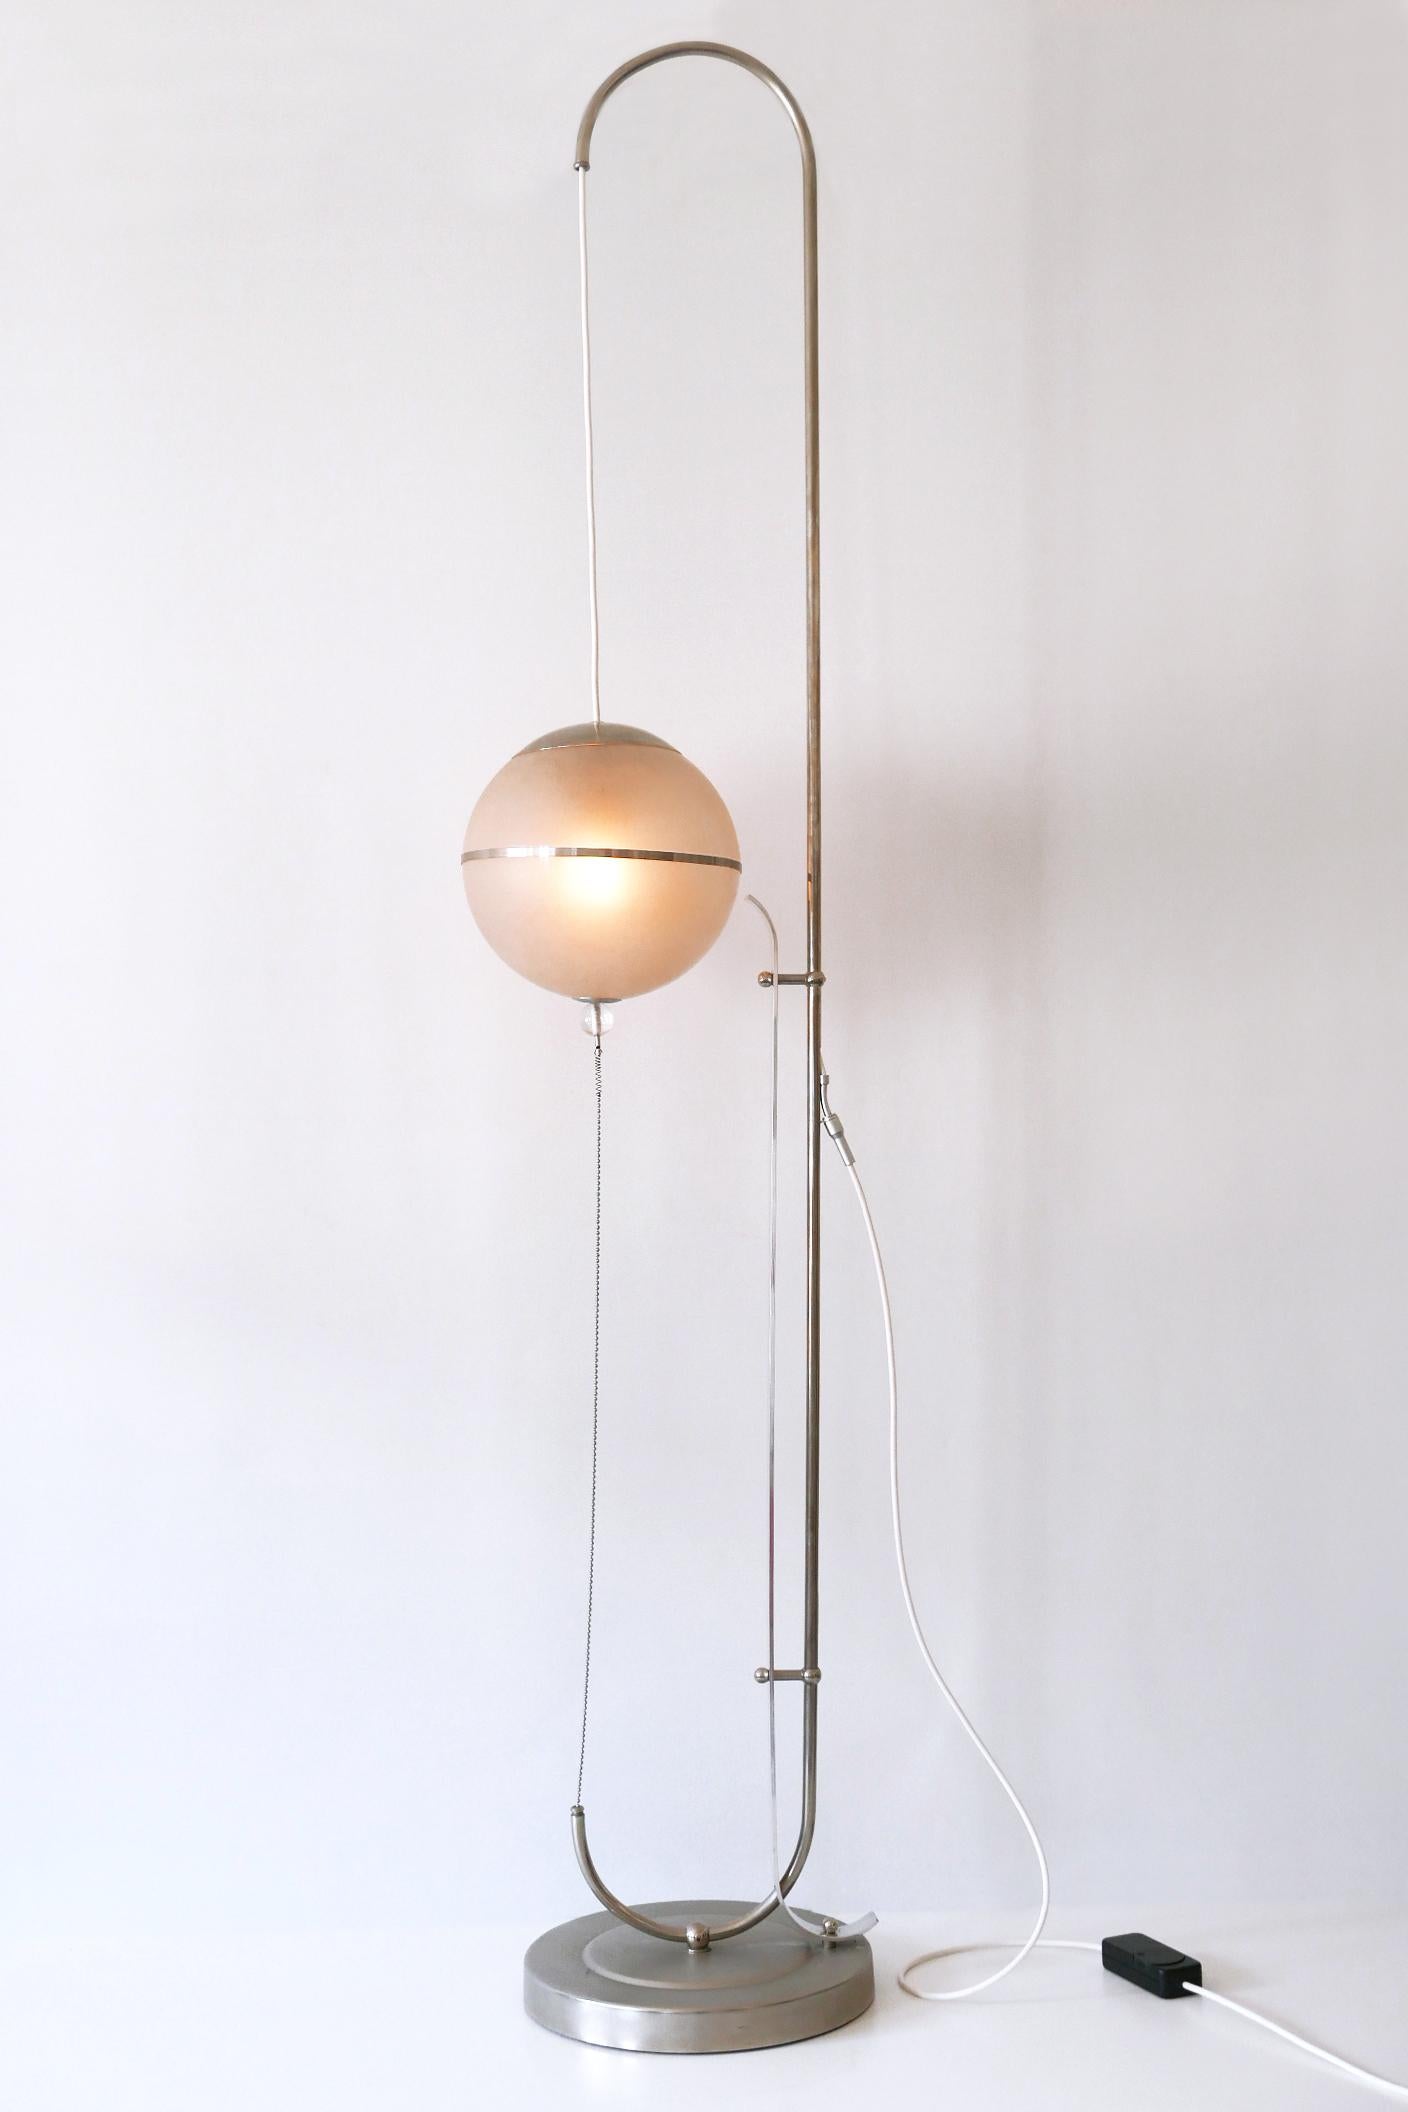 Plexiglass Bauhaus Floor Lamp by Karl Trabert for Schanzenbach & Co 1930s Germany For Sale